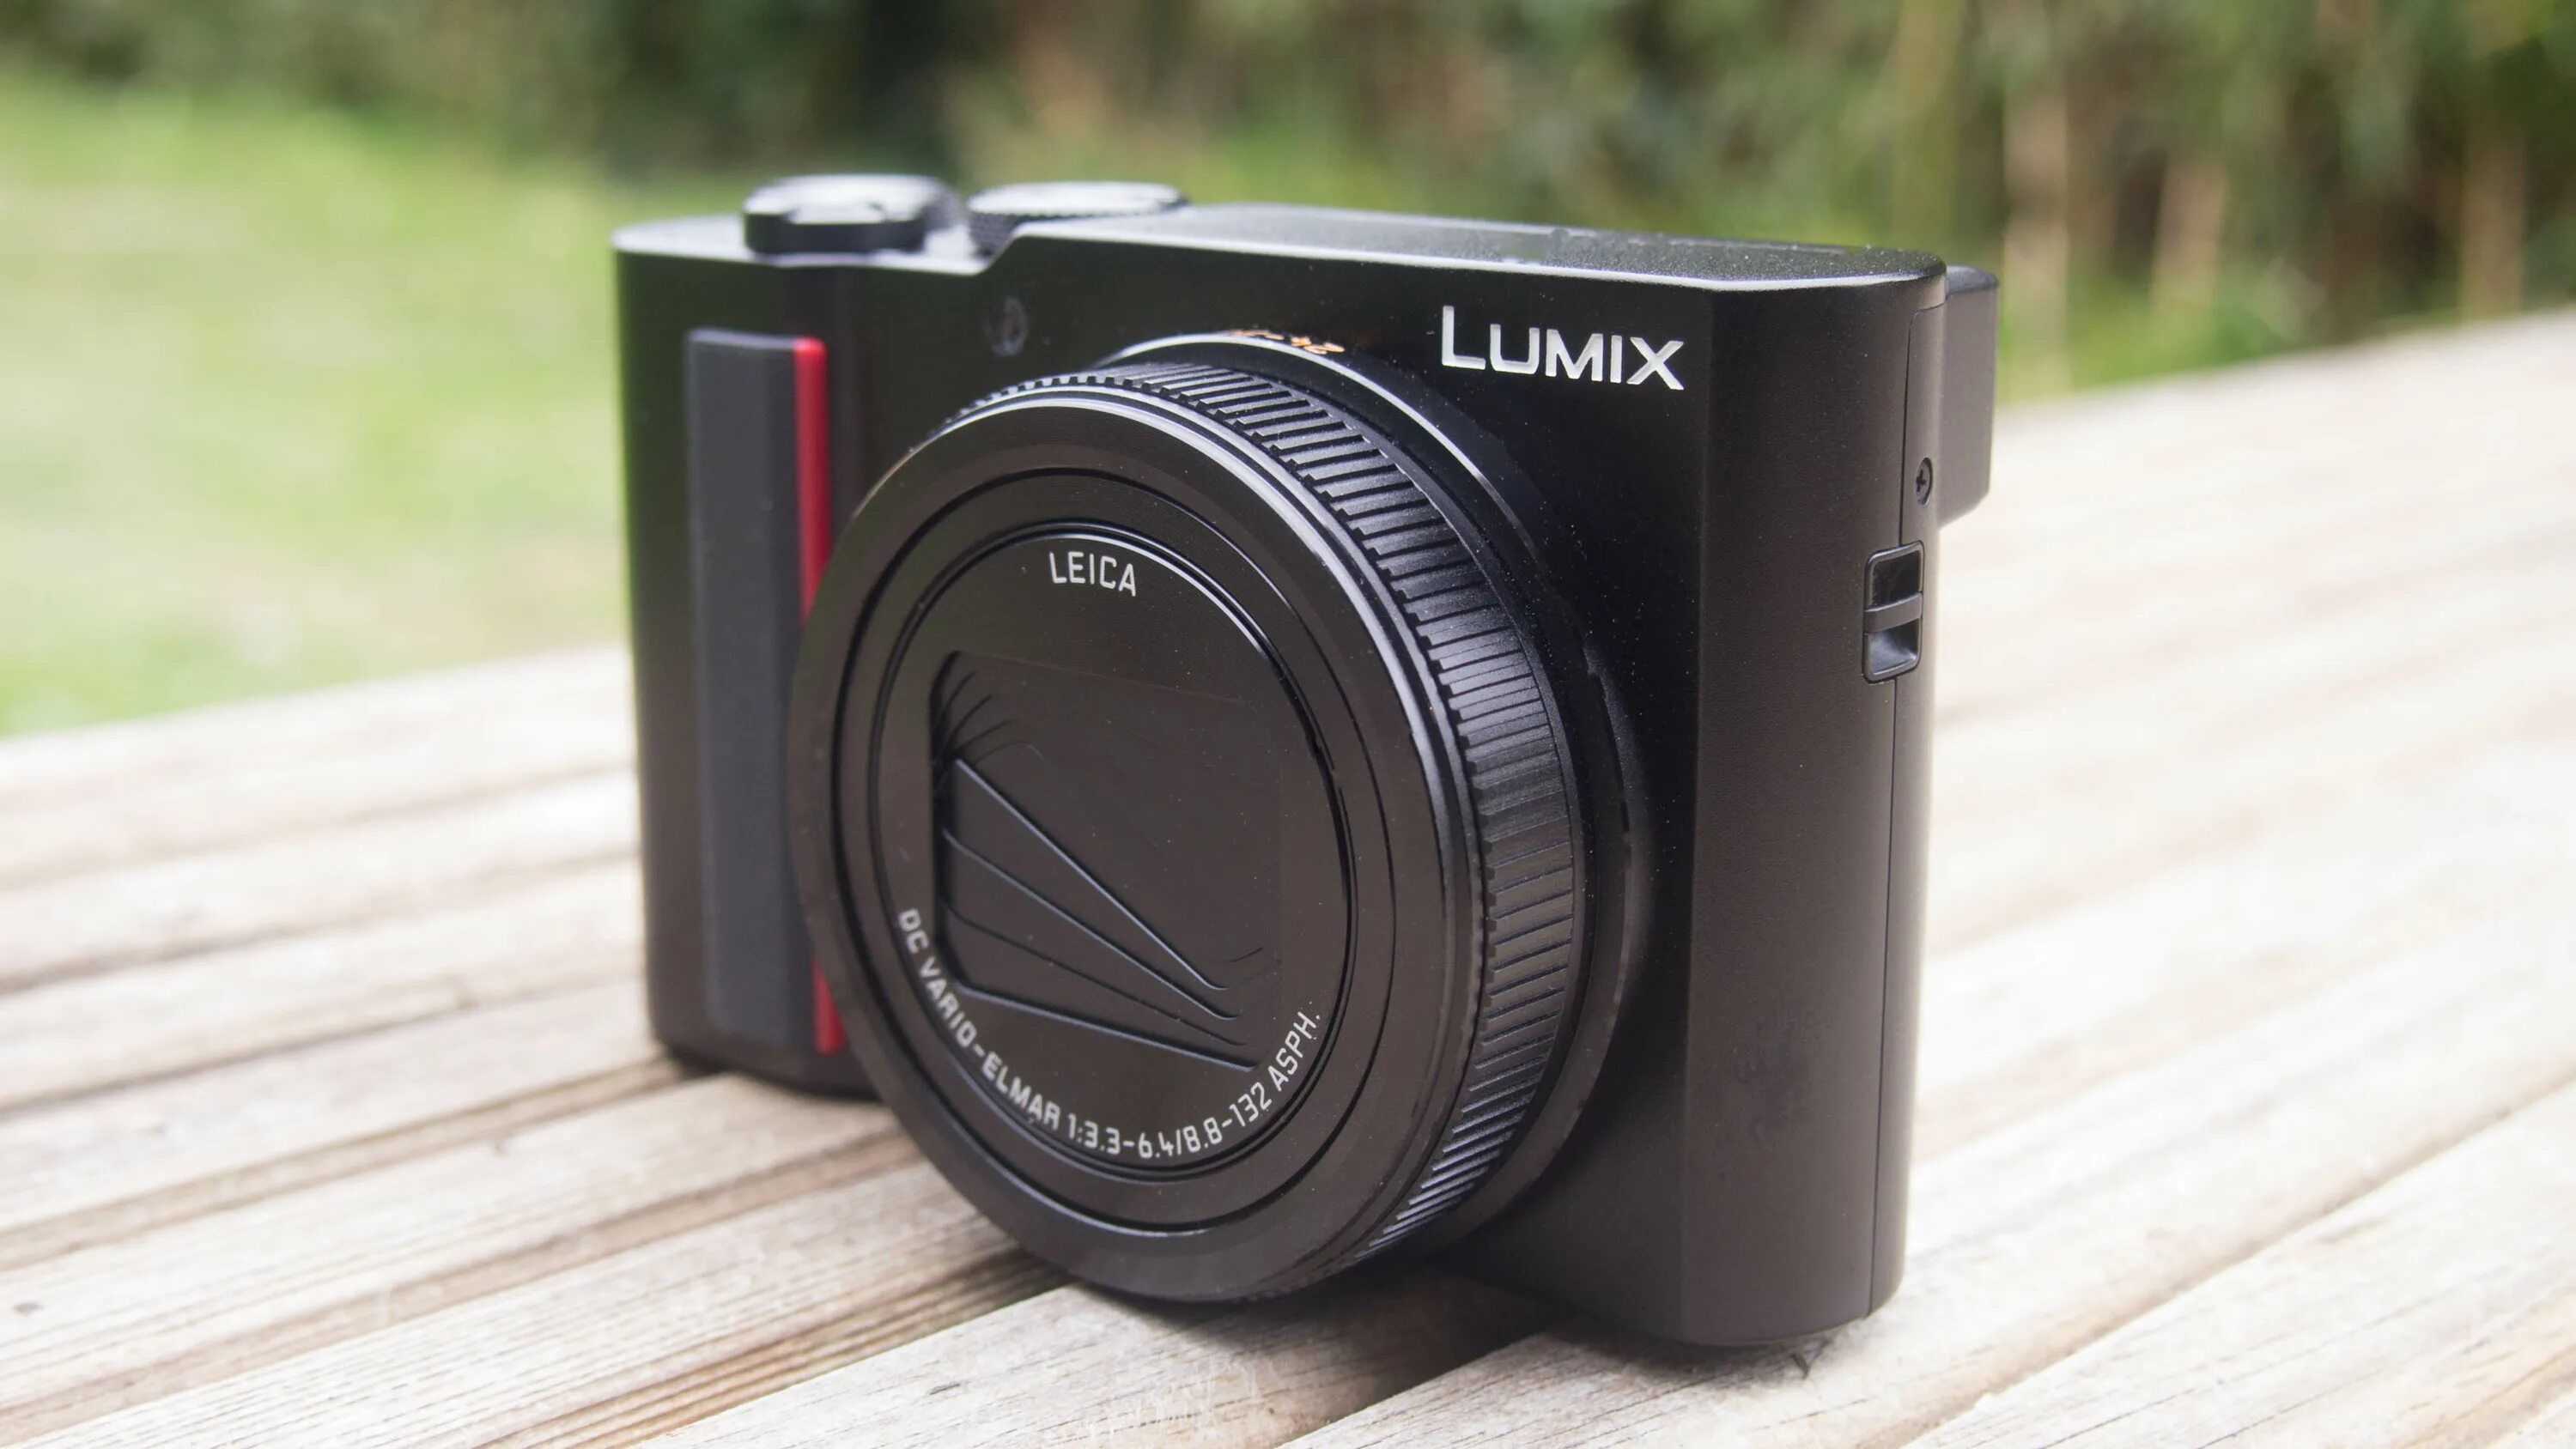 Lumix tz200. Sony rx100 VII. Lumix tz202d. Компактные фотоаппараты Leica 2021. Какой компакт лучше